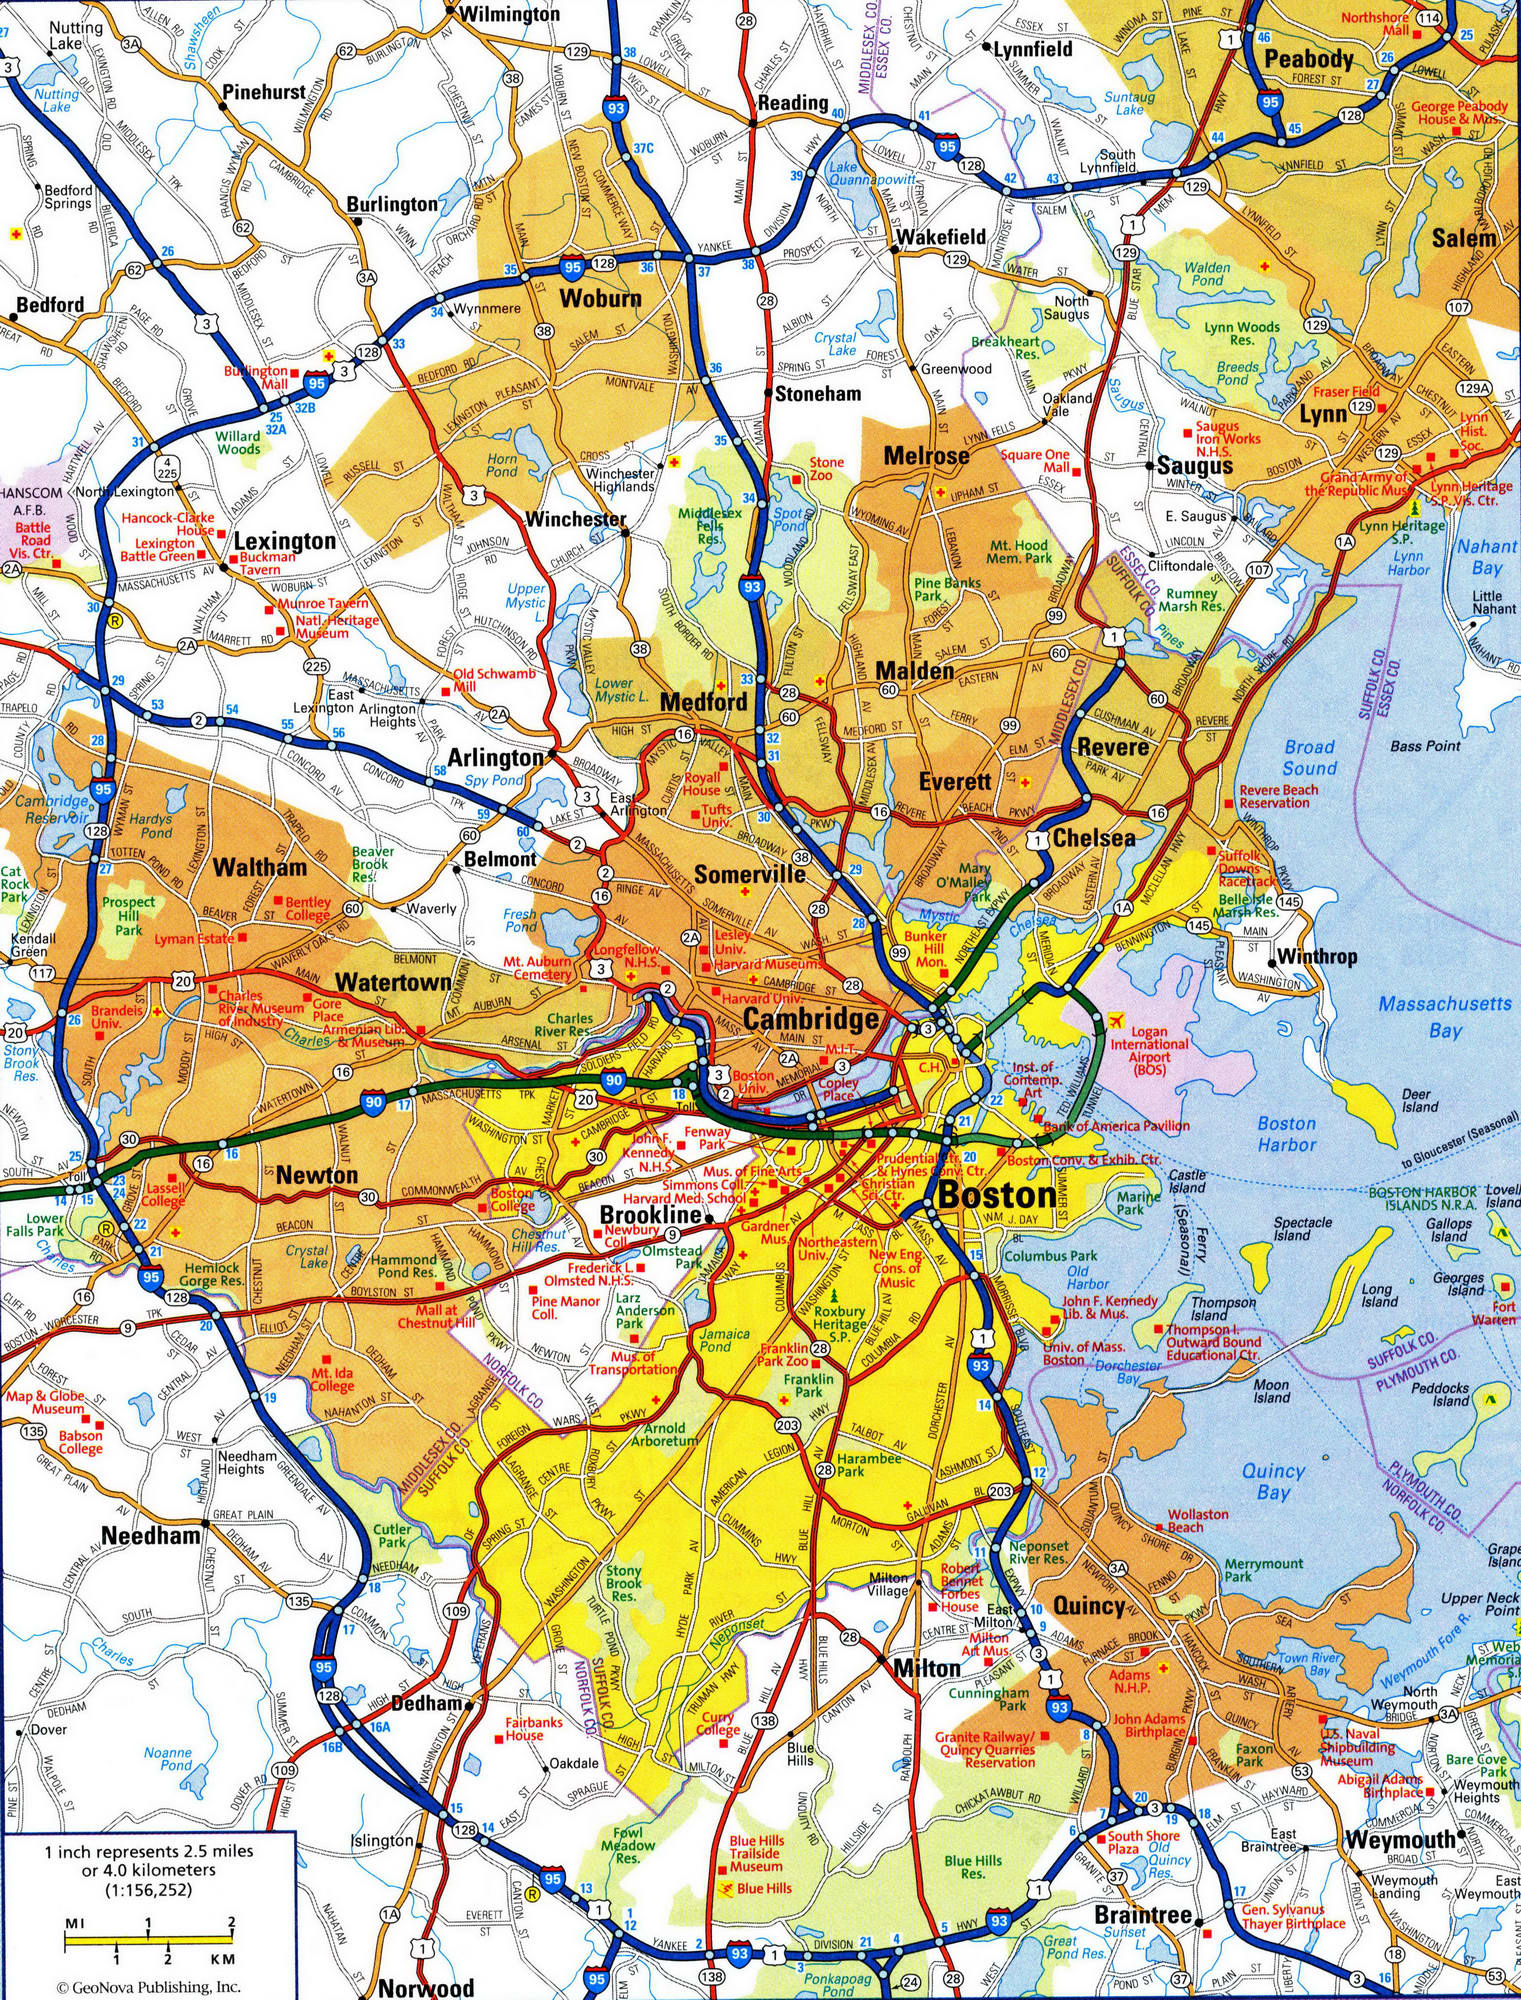 Detailed map of Boston